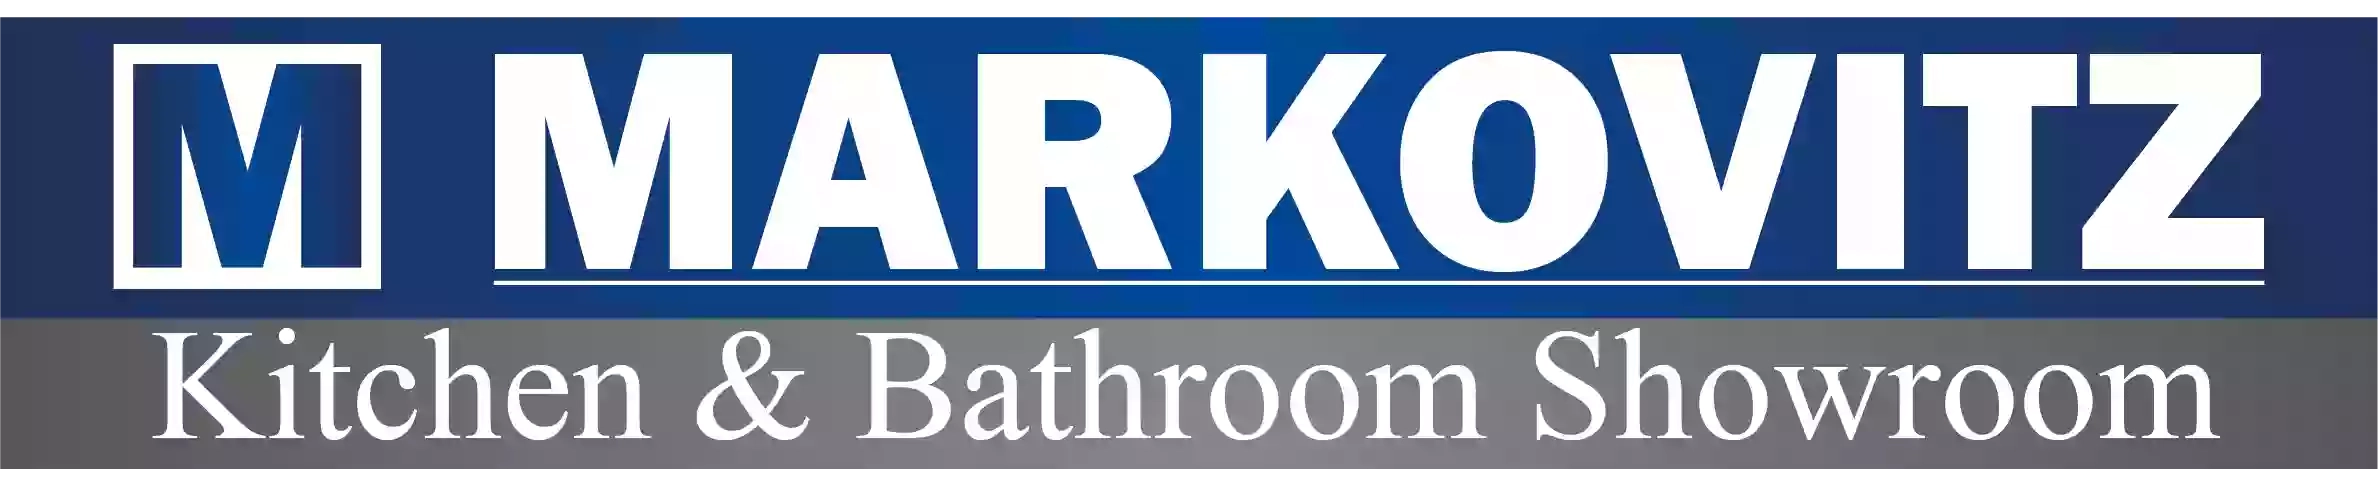 M Markovitz LTD Kitchen & Bathroom Showroom